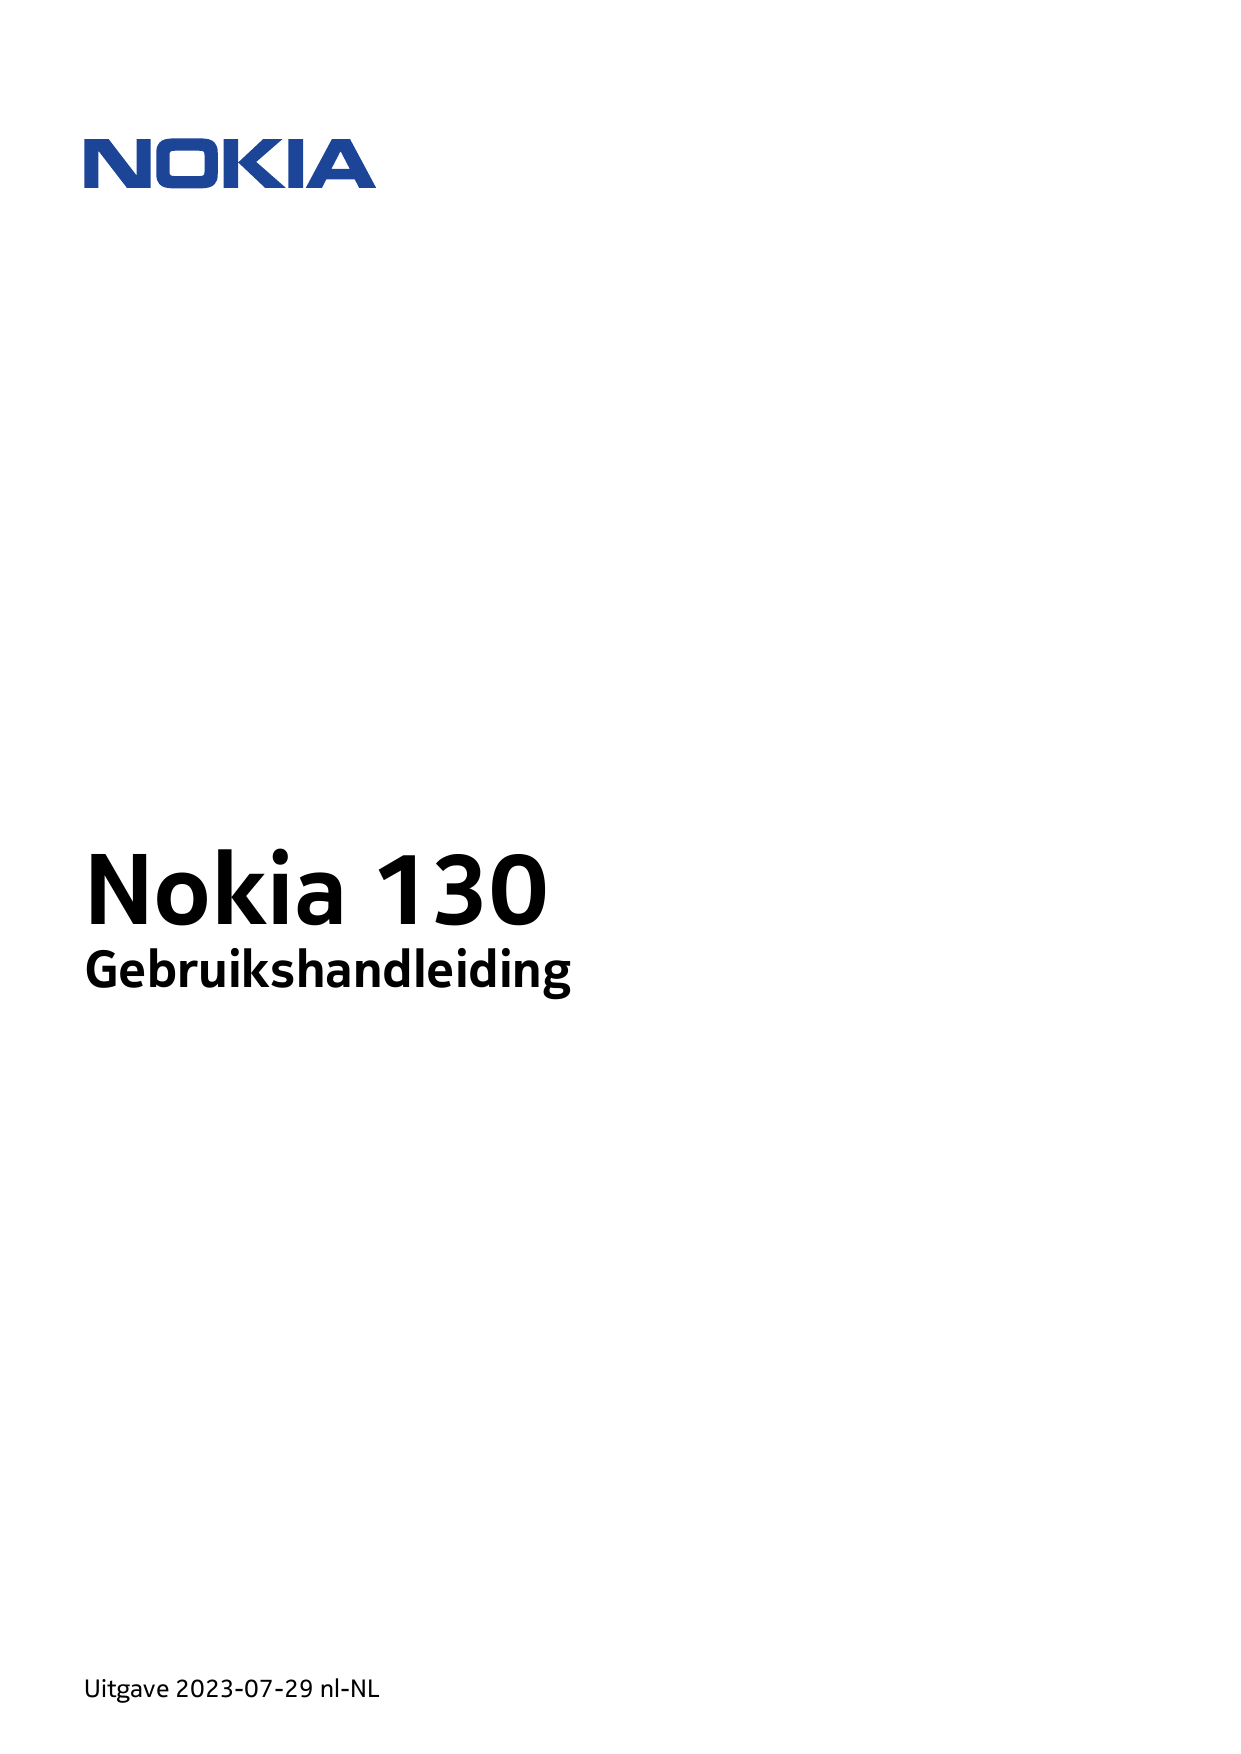 Nokia 130GebruikshandleidingUitgave 2023-07-29 nl-NL